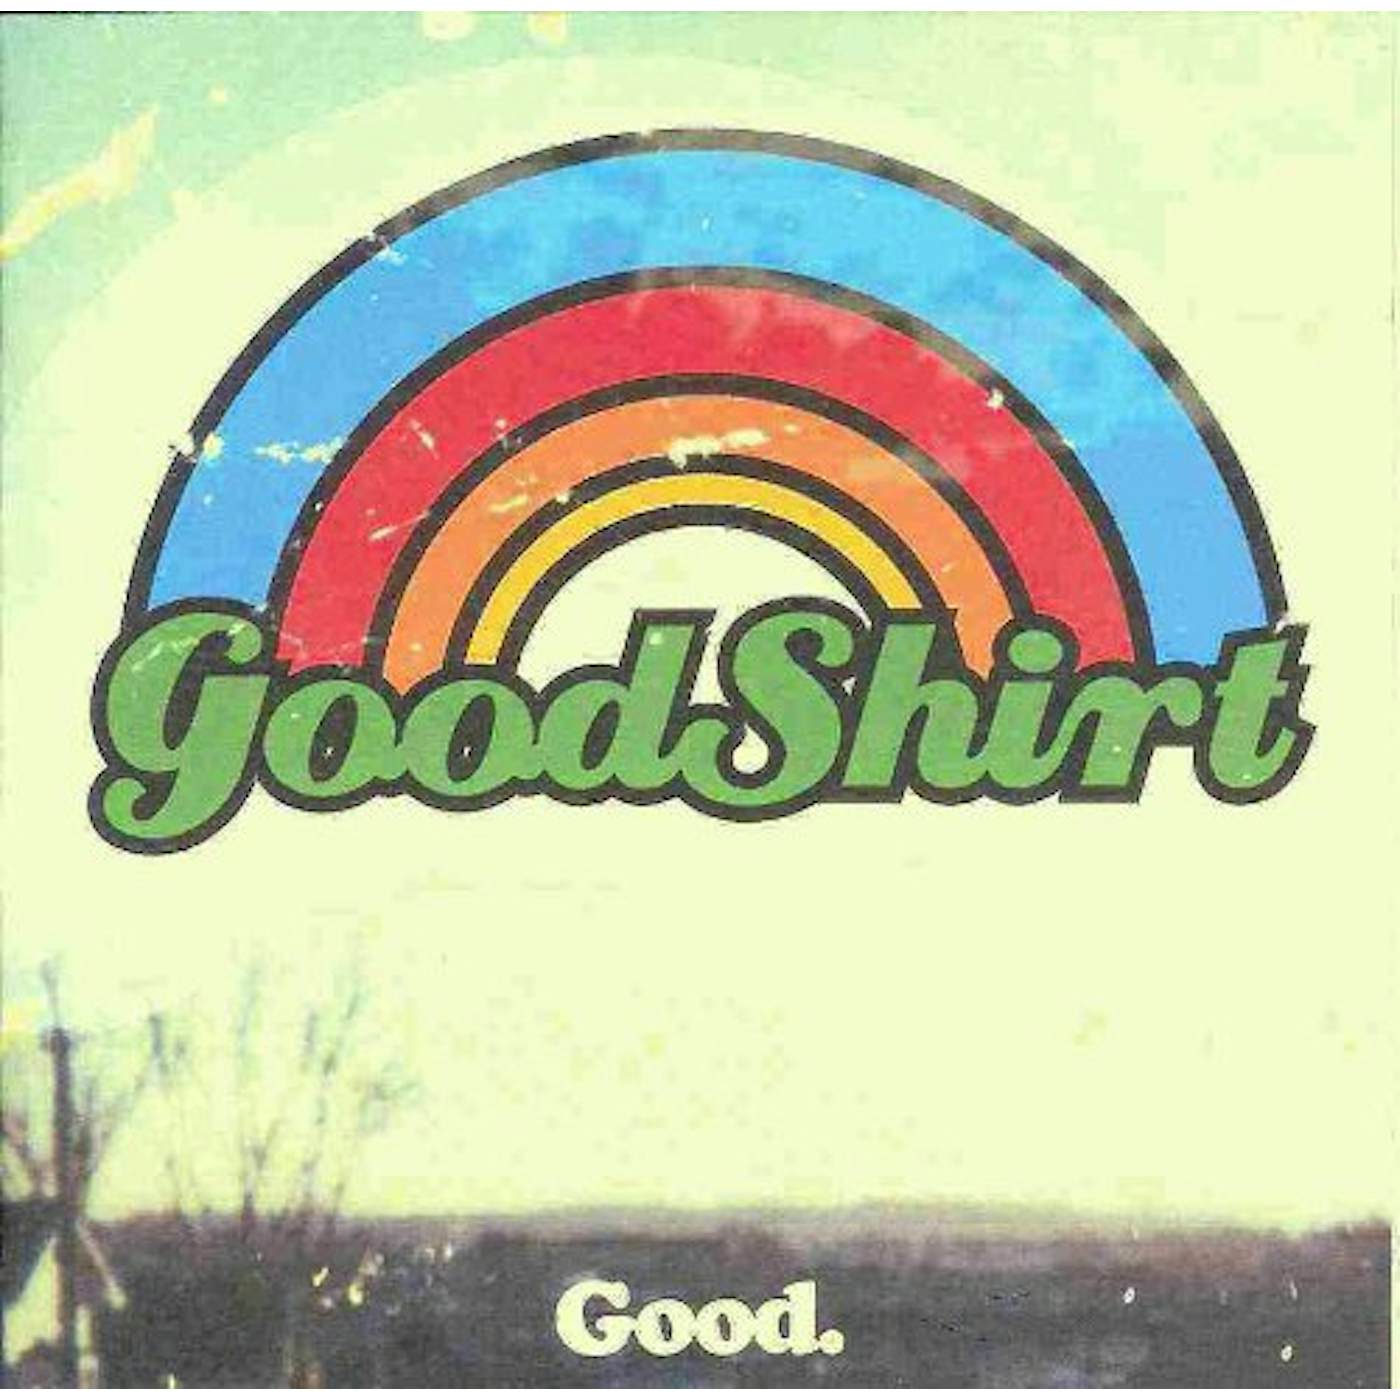 Goodshirt GOOD CD